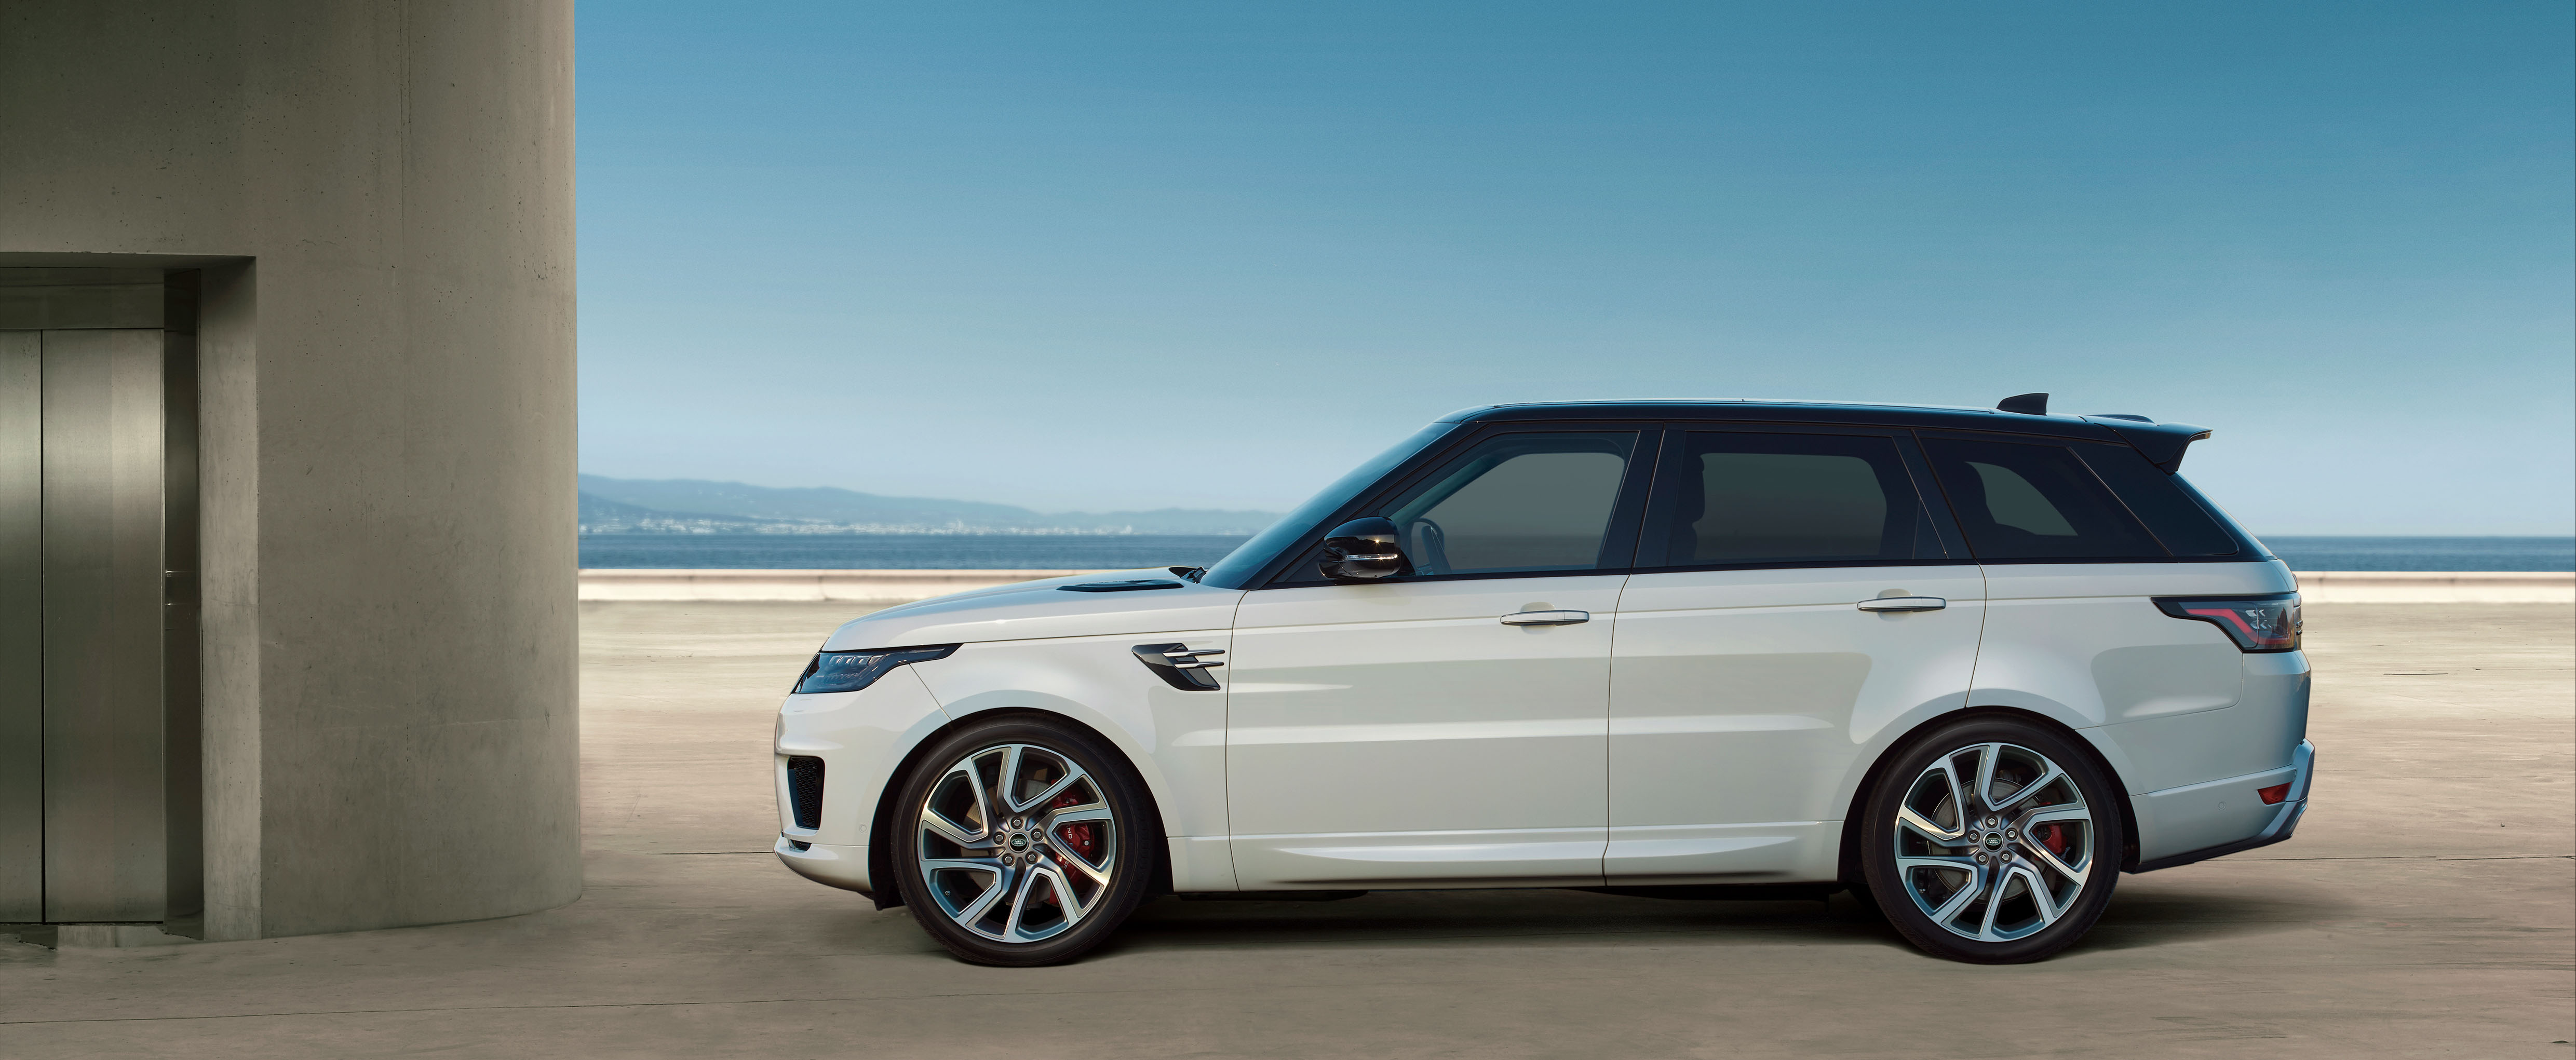 Range Rover Sport luxury car rental